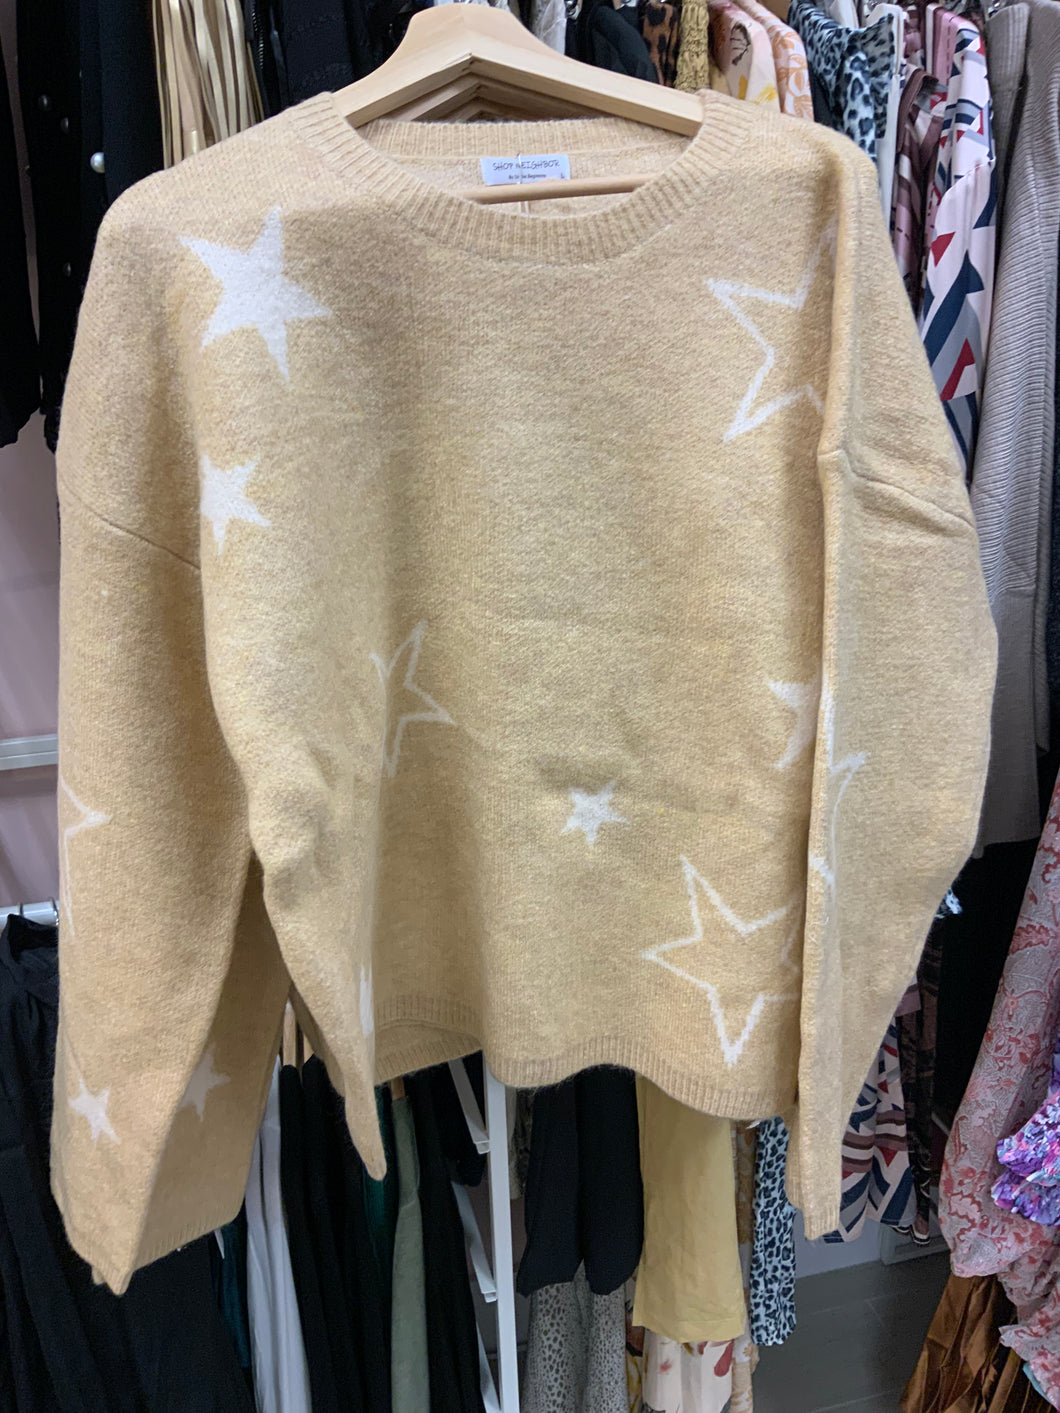 Starry sweater